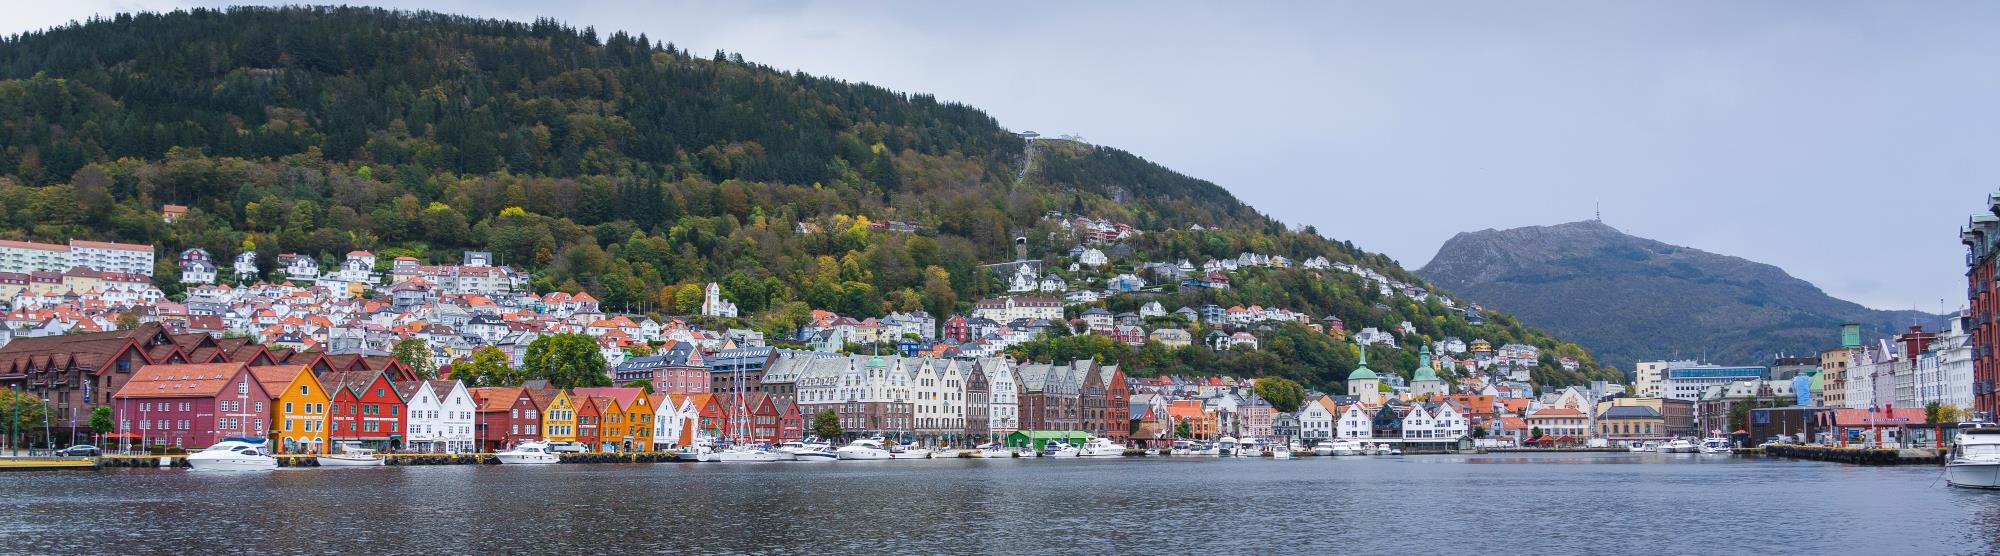 10 reasons why Bergen